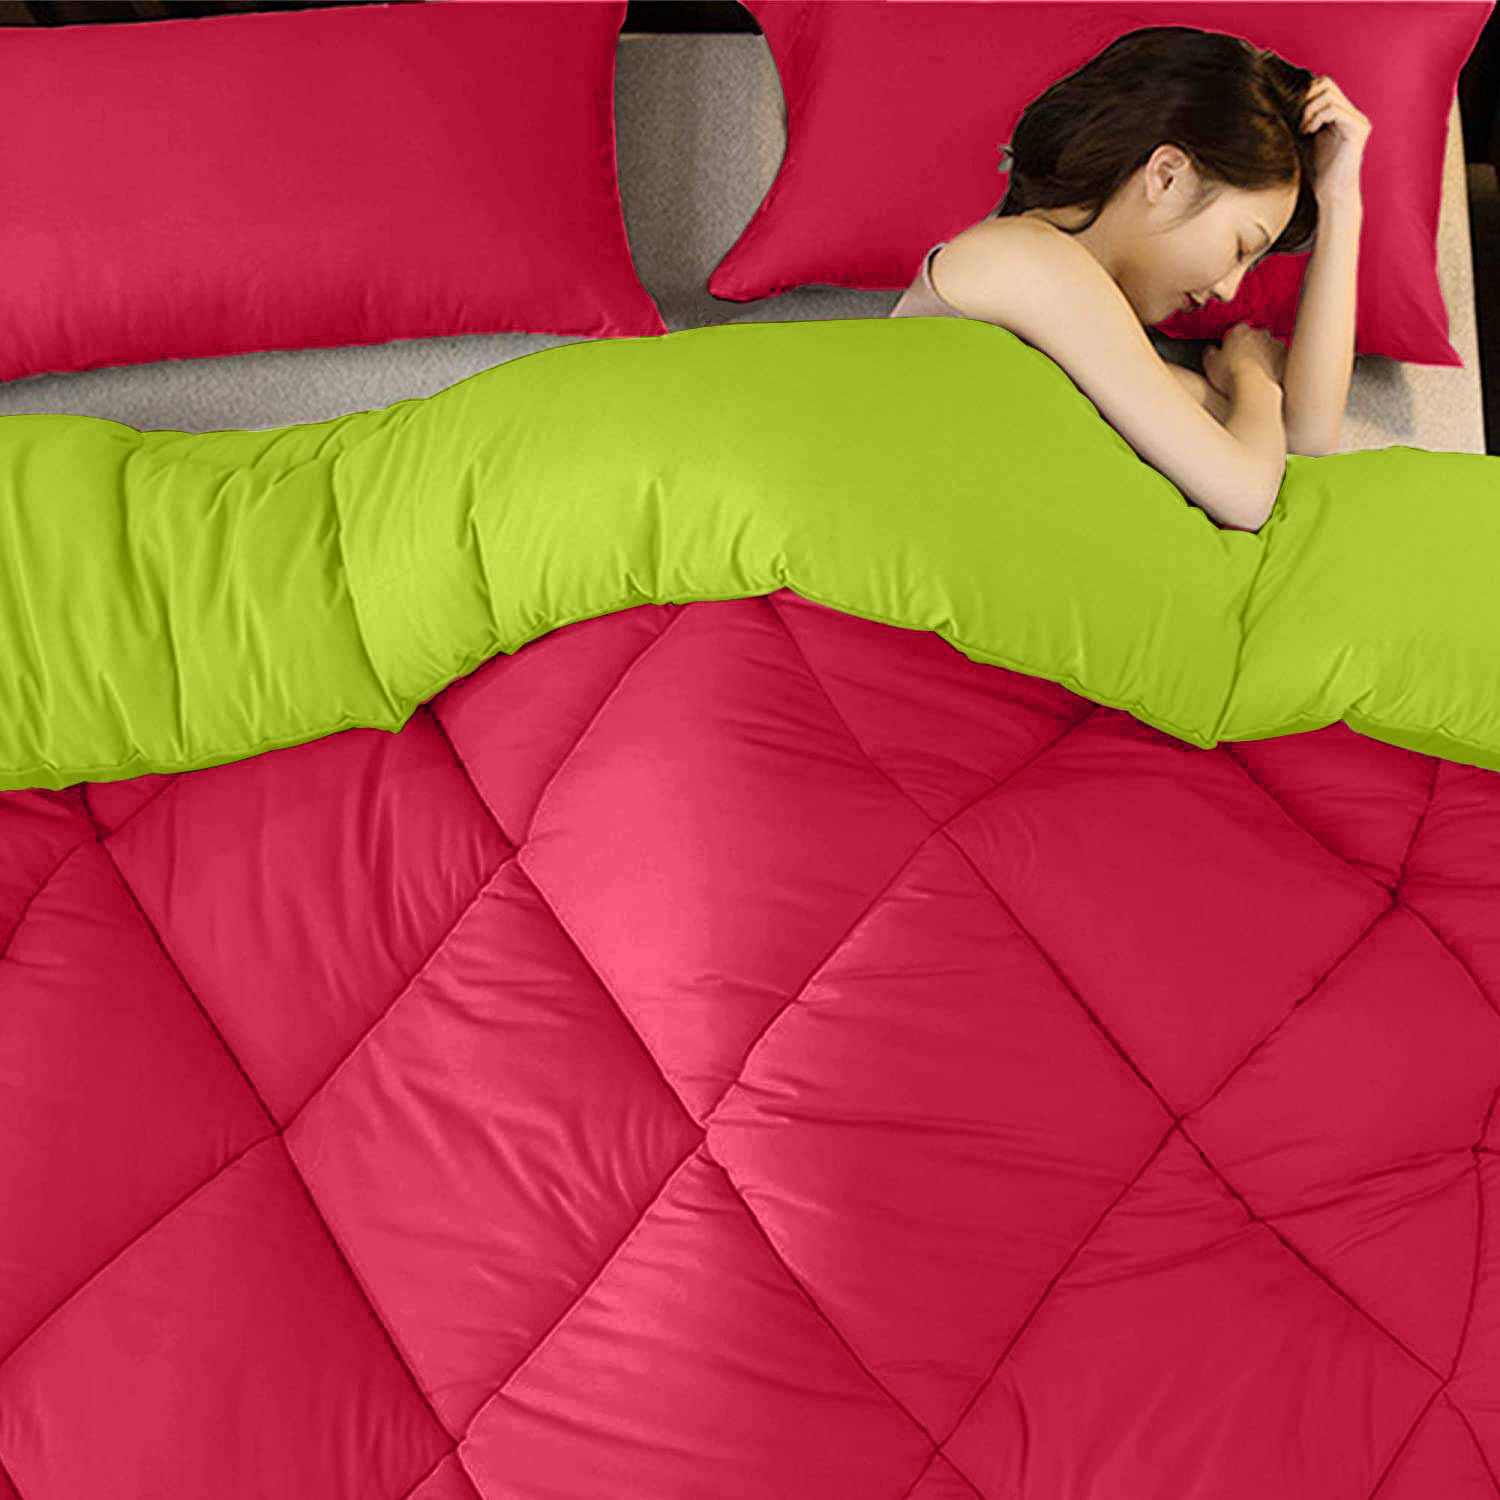 Red-Lemon Green  Double Bed Comforter